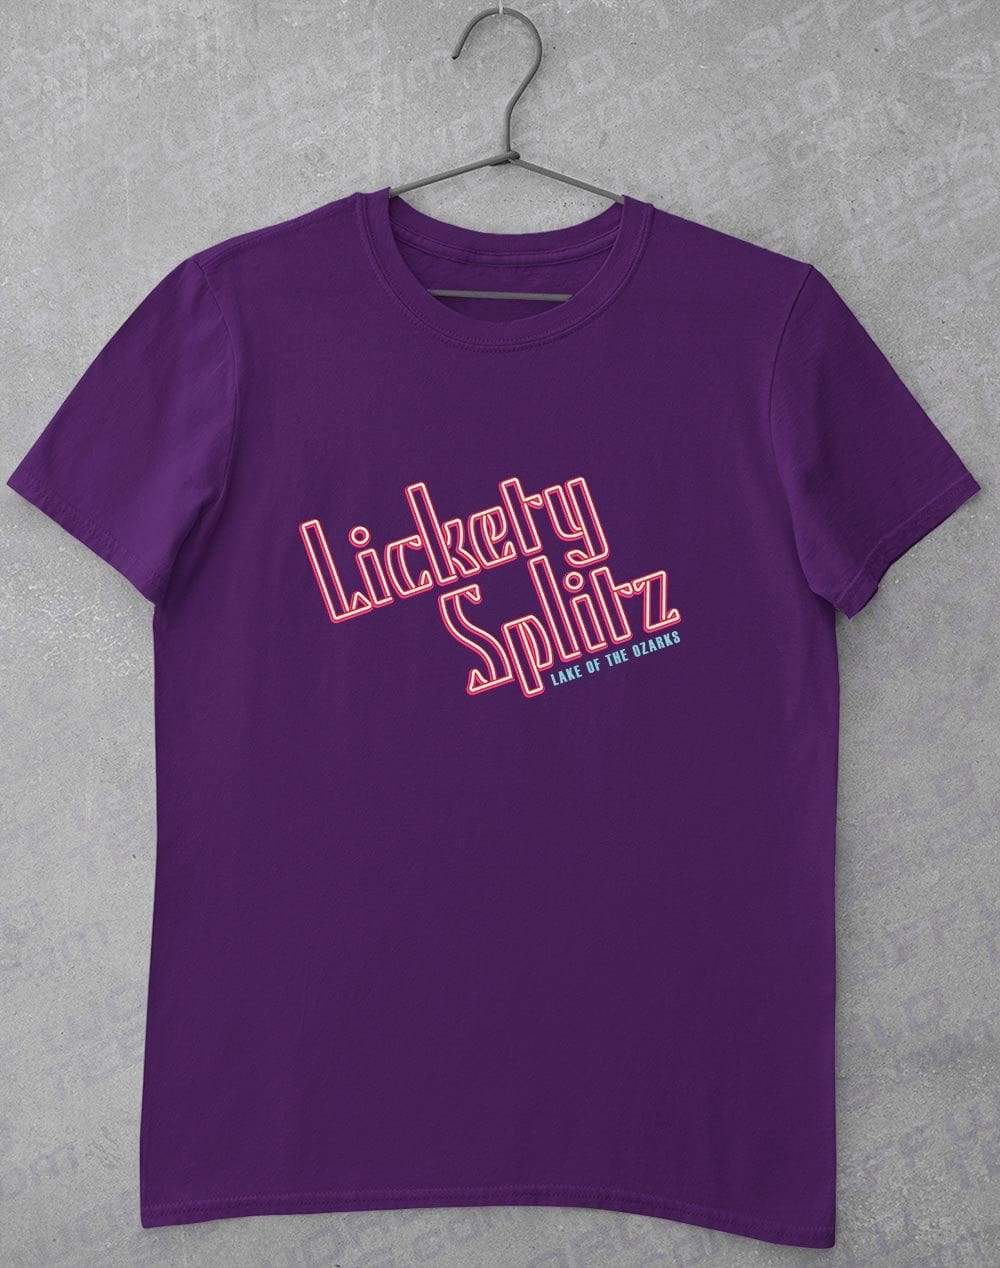 Lickety Splitz T-Shirt S / Purple  - Off World Tees